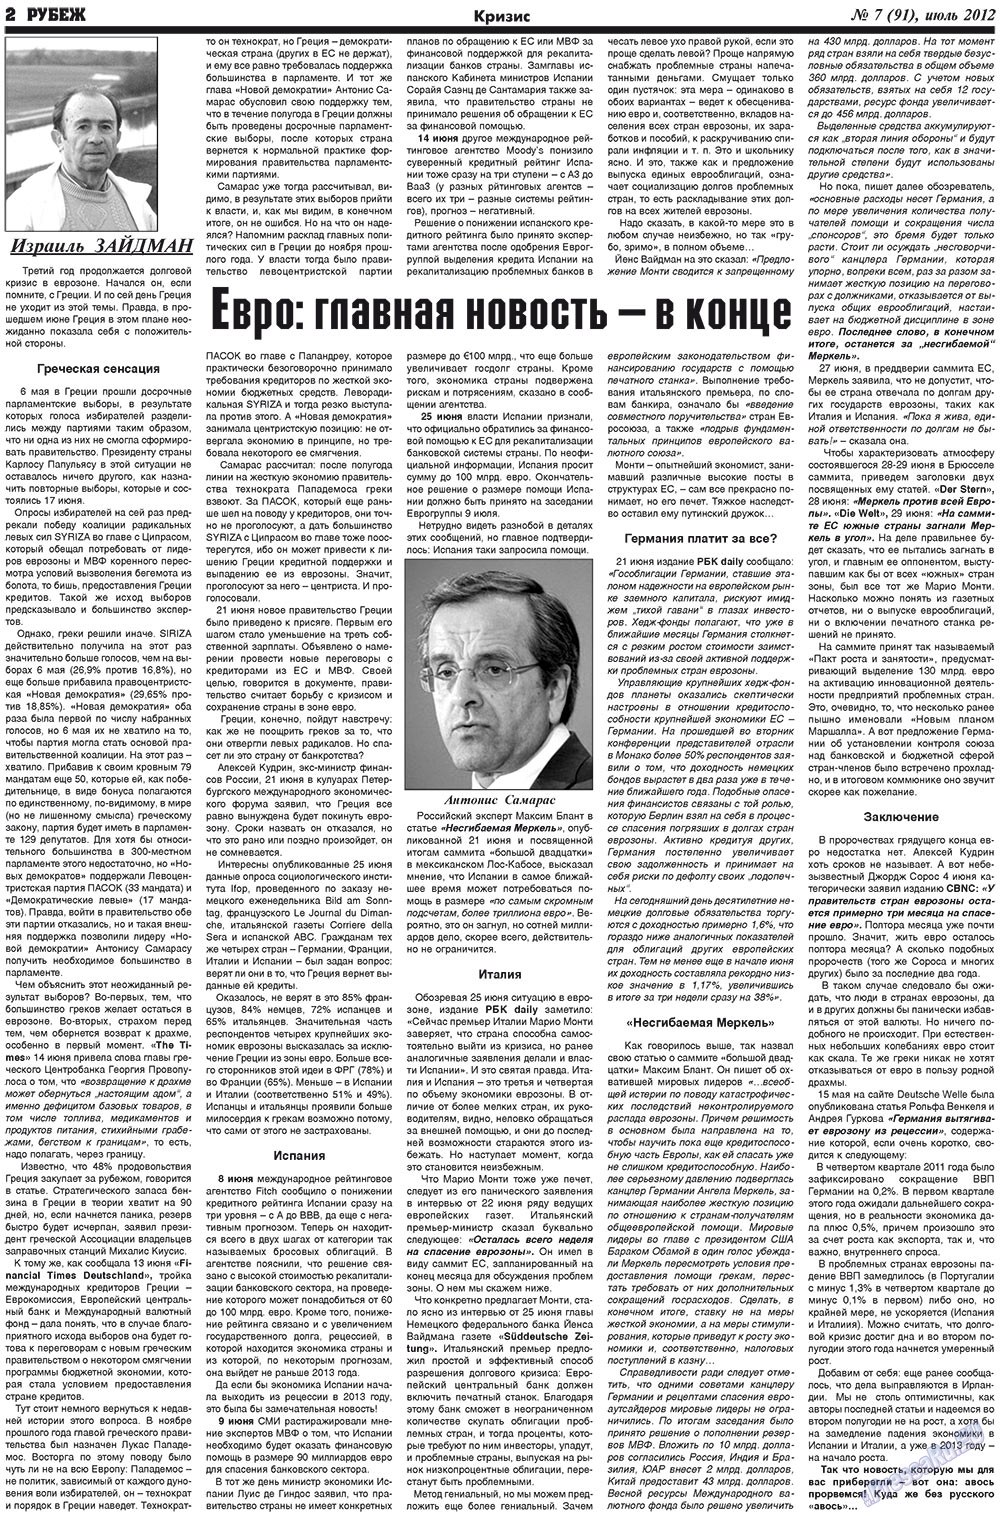 Рубеж, газета. 2012 №7 стр.2